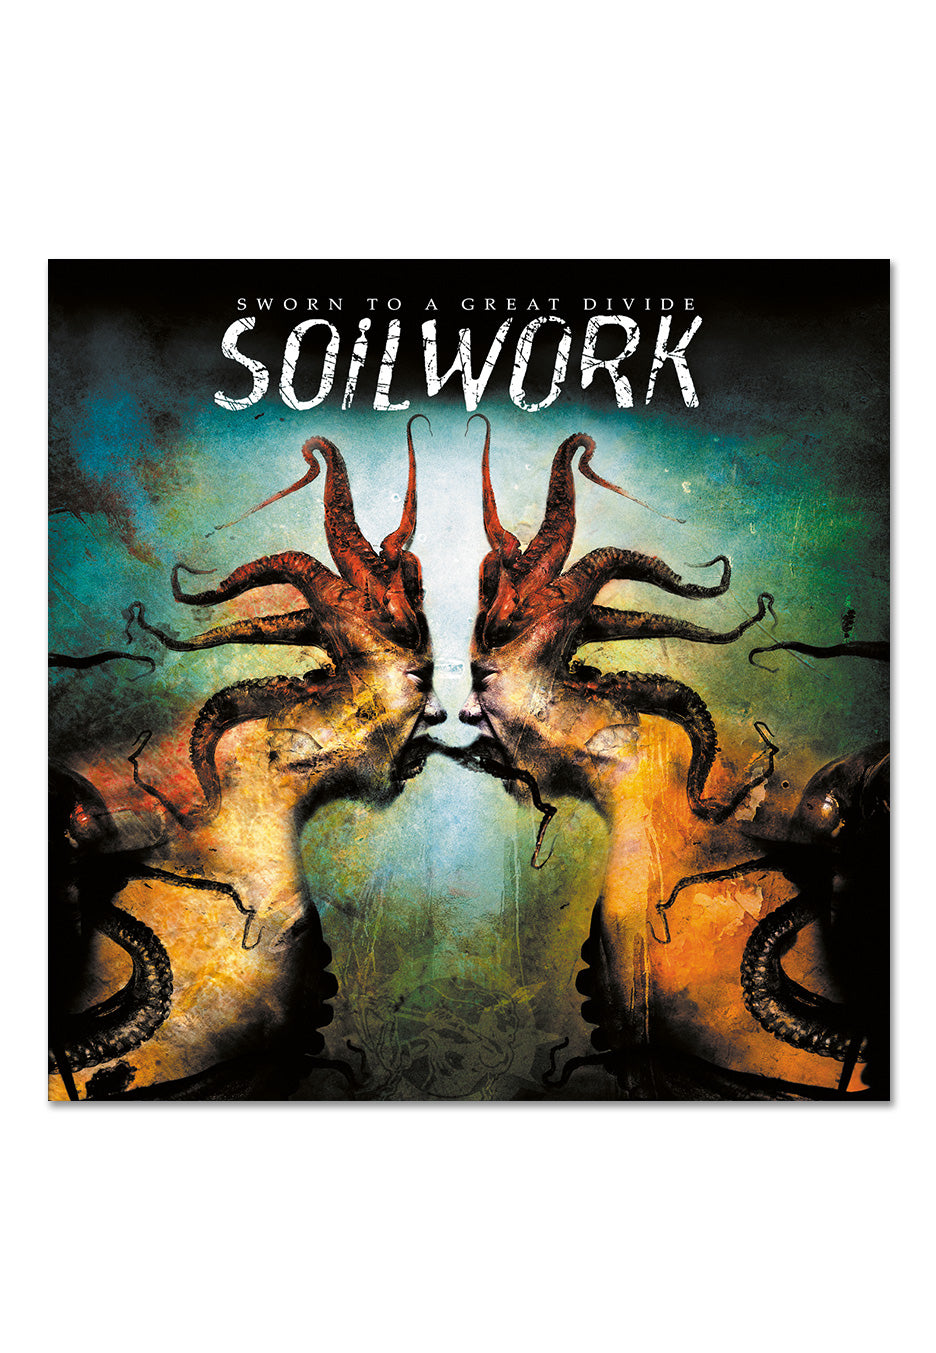 Soilwork - Sworn To A Great Divide Ltd. Orange/Green Sunburst - Colored Vinyl | Neutral-Image